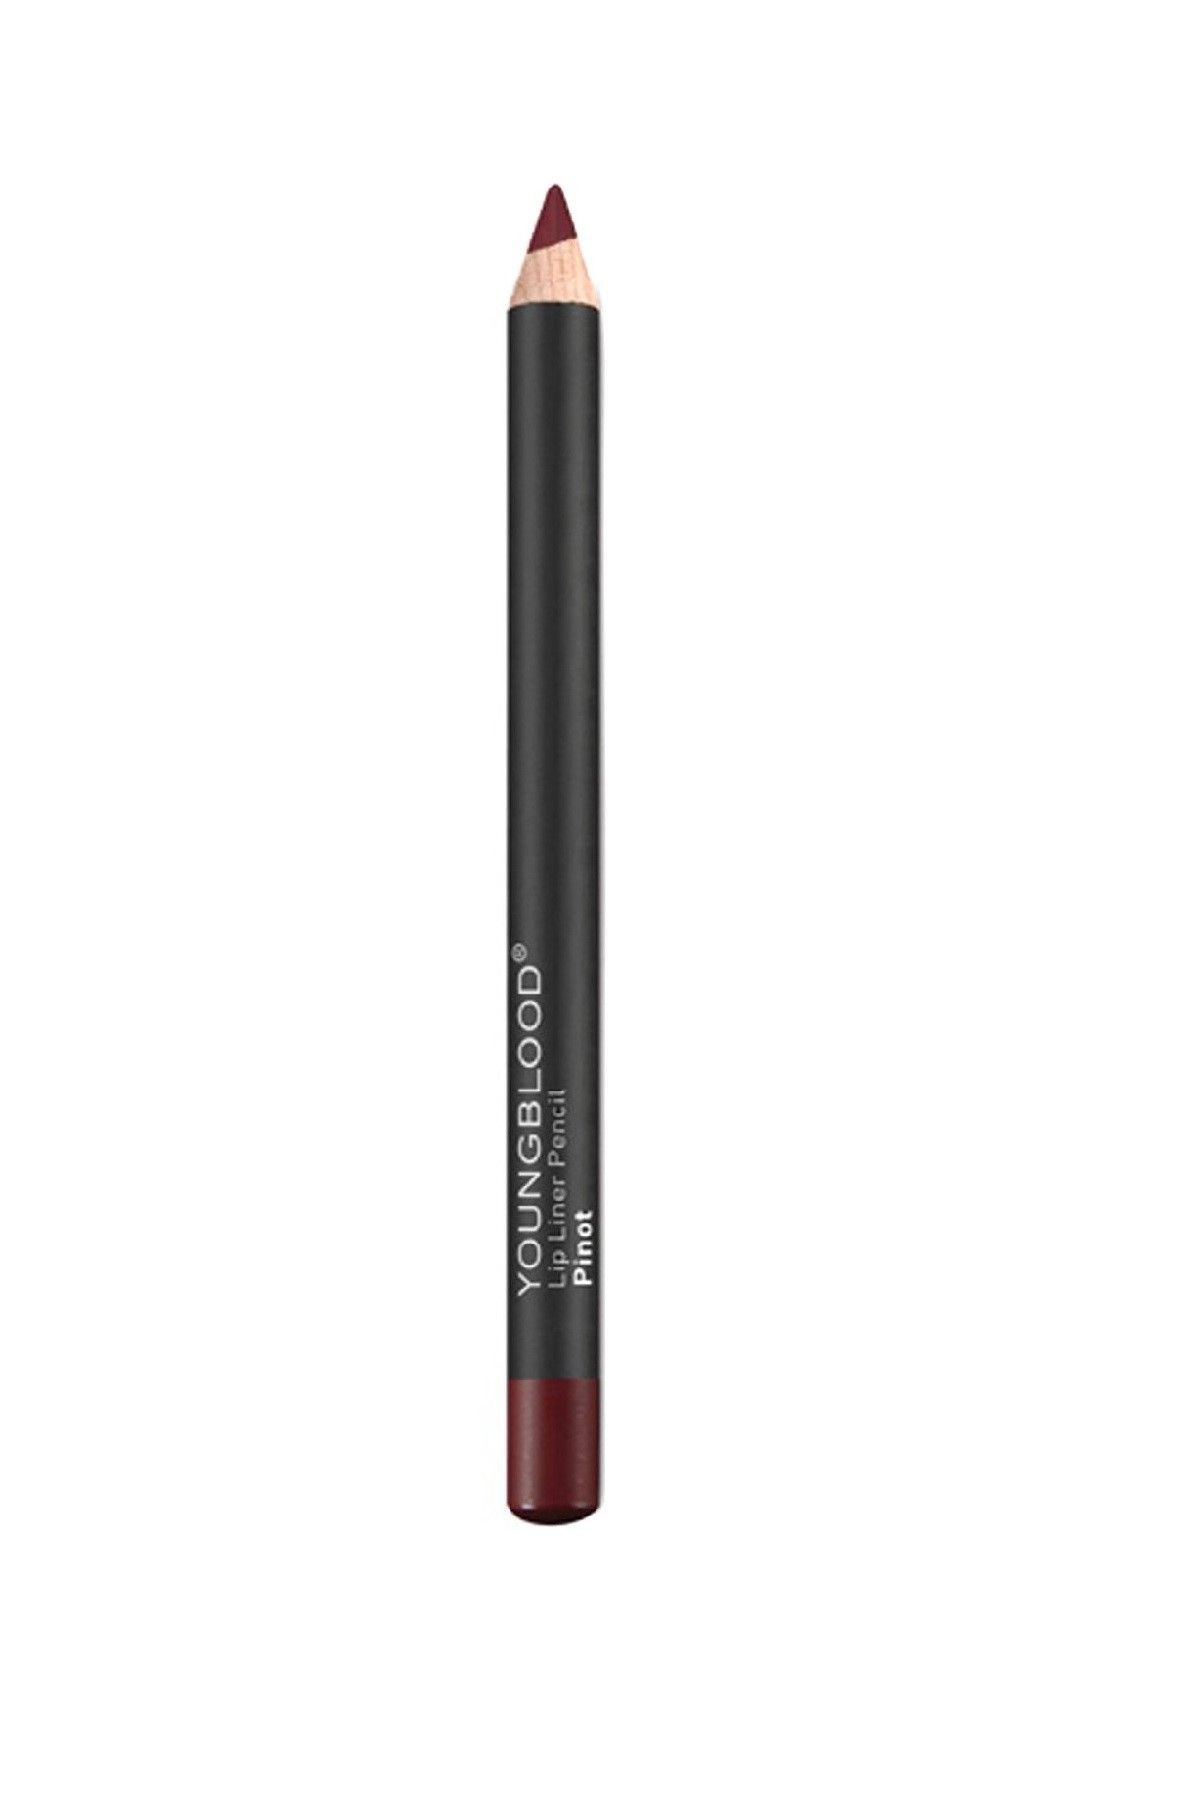 Youngblood Bordo Tonlarında Dudak Kalemi - Lip Liner Pencil Pinot 696137130101